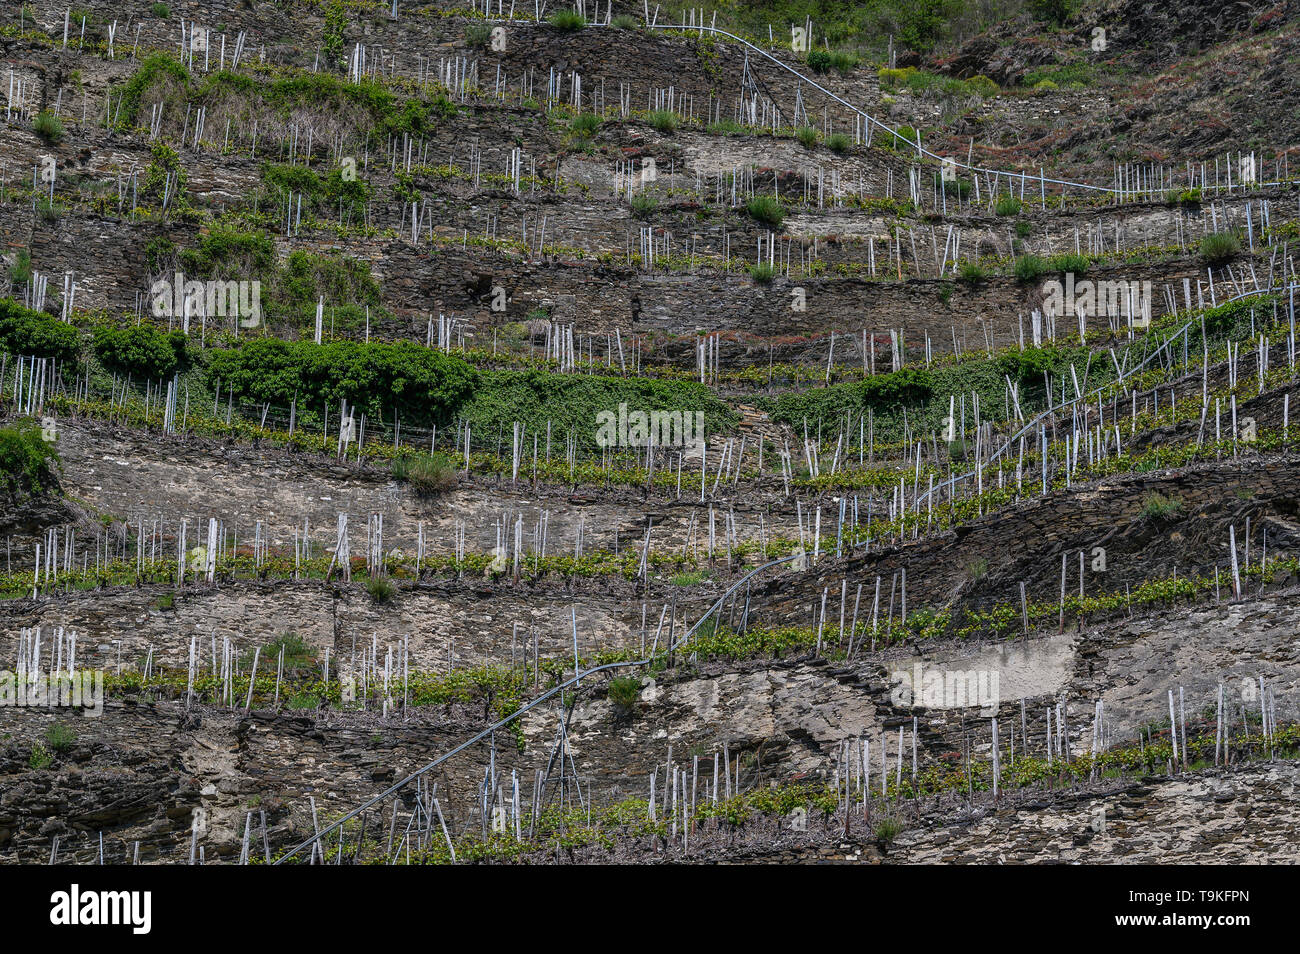 vineyards of Kobern-Gondorf, Mosel Valley, Germany Stock Photo